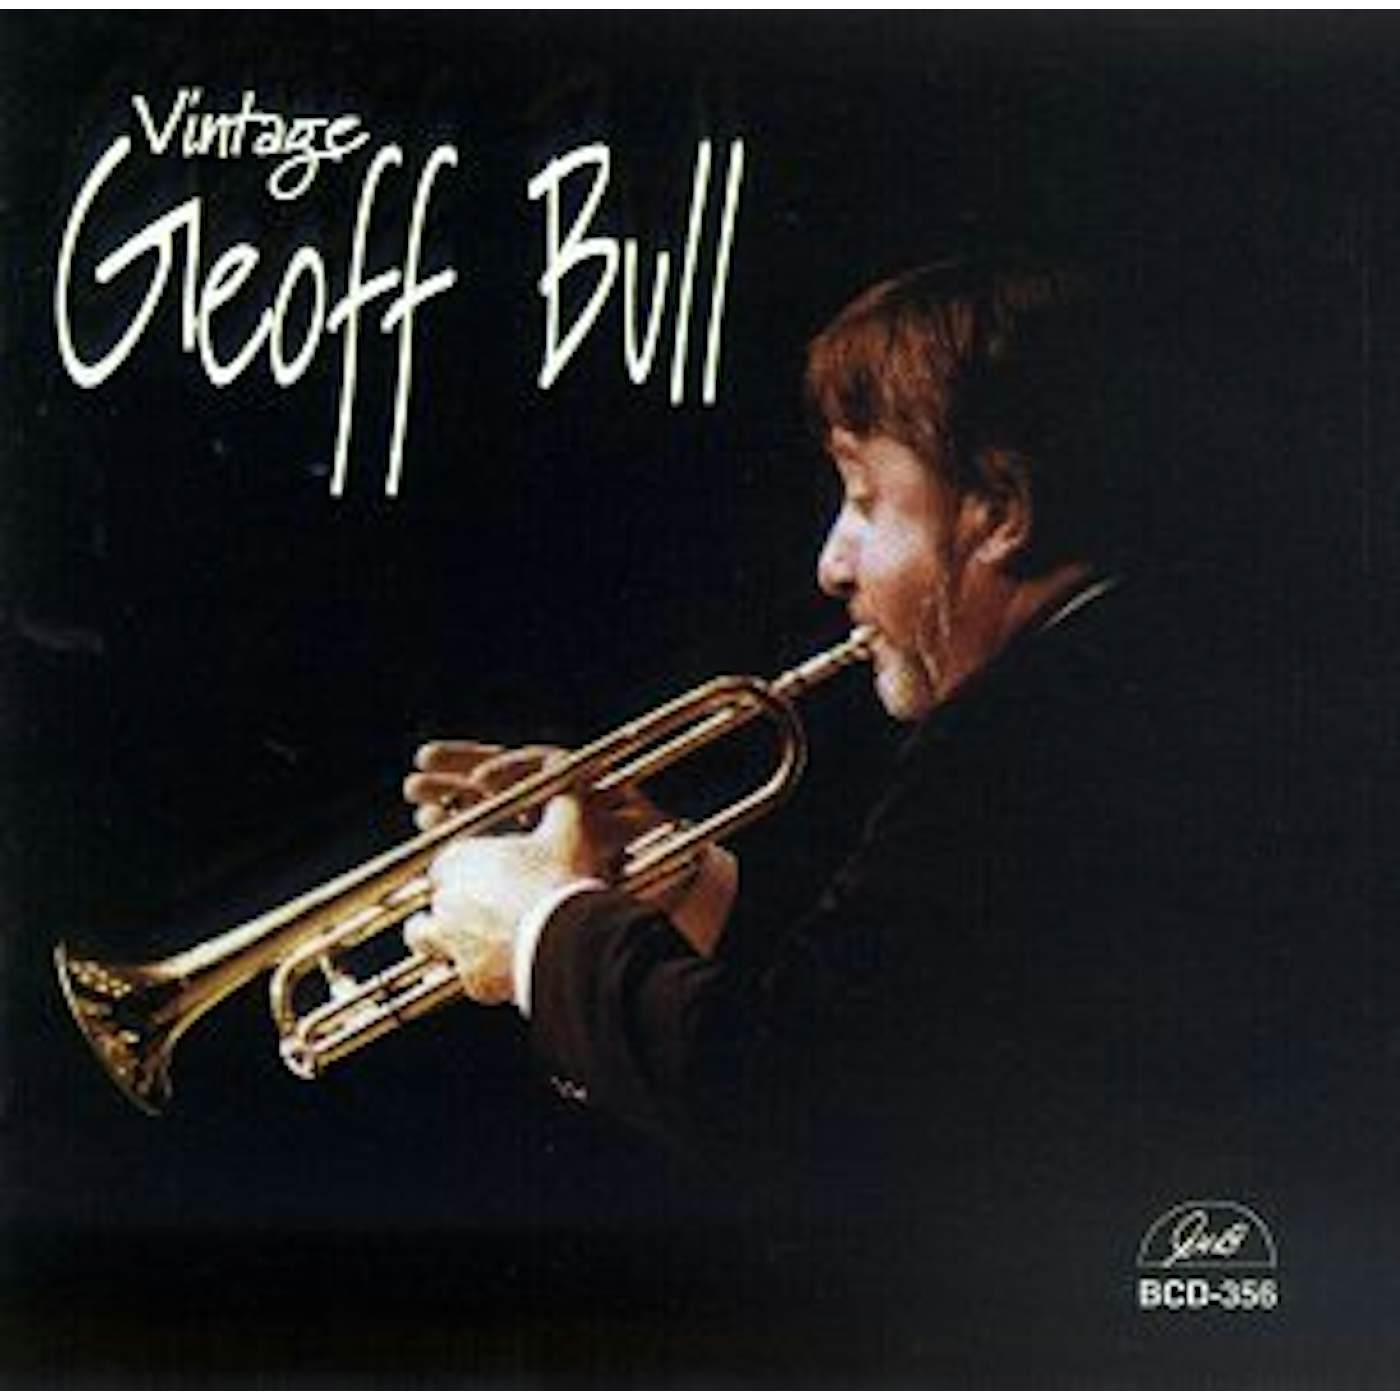 VINTAGE GEOFF BULL CD